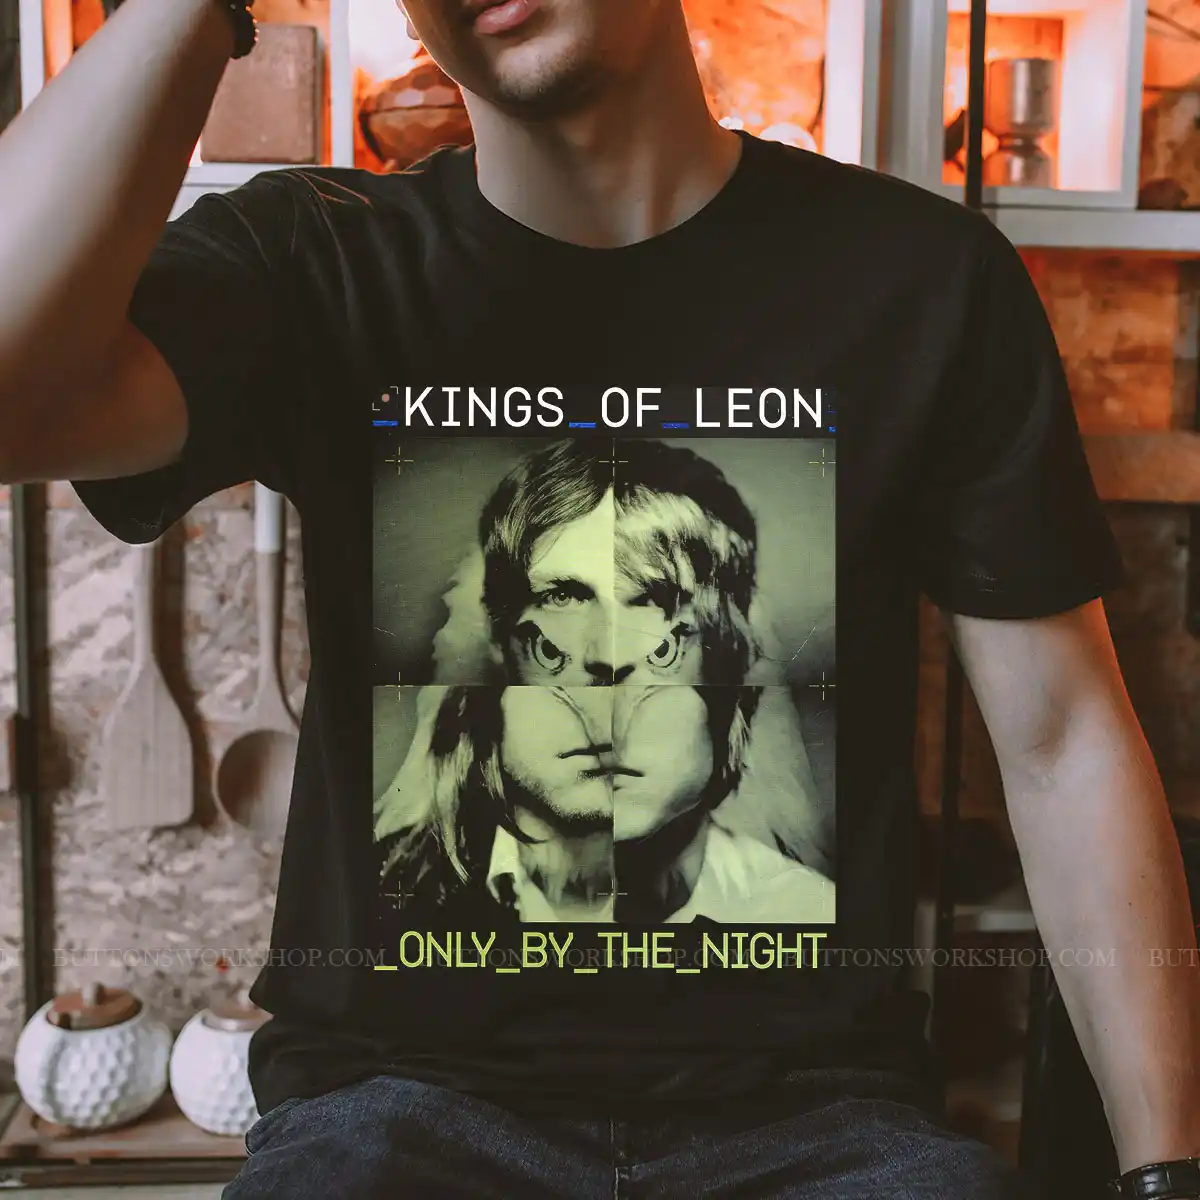 kings of leon tour shirt